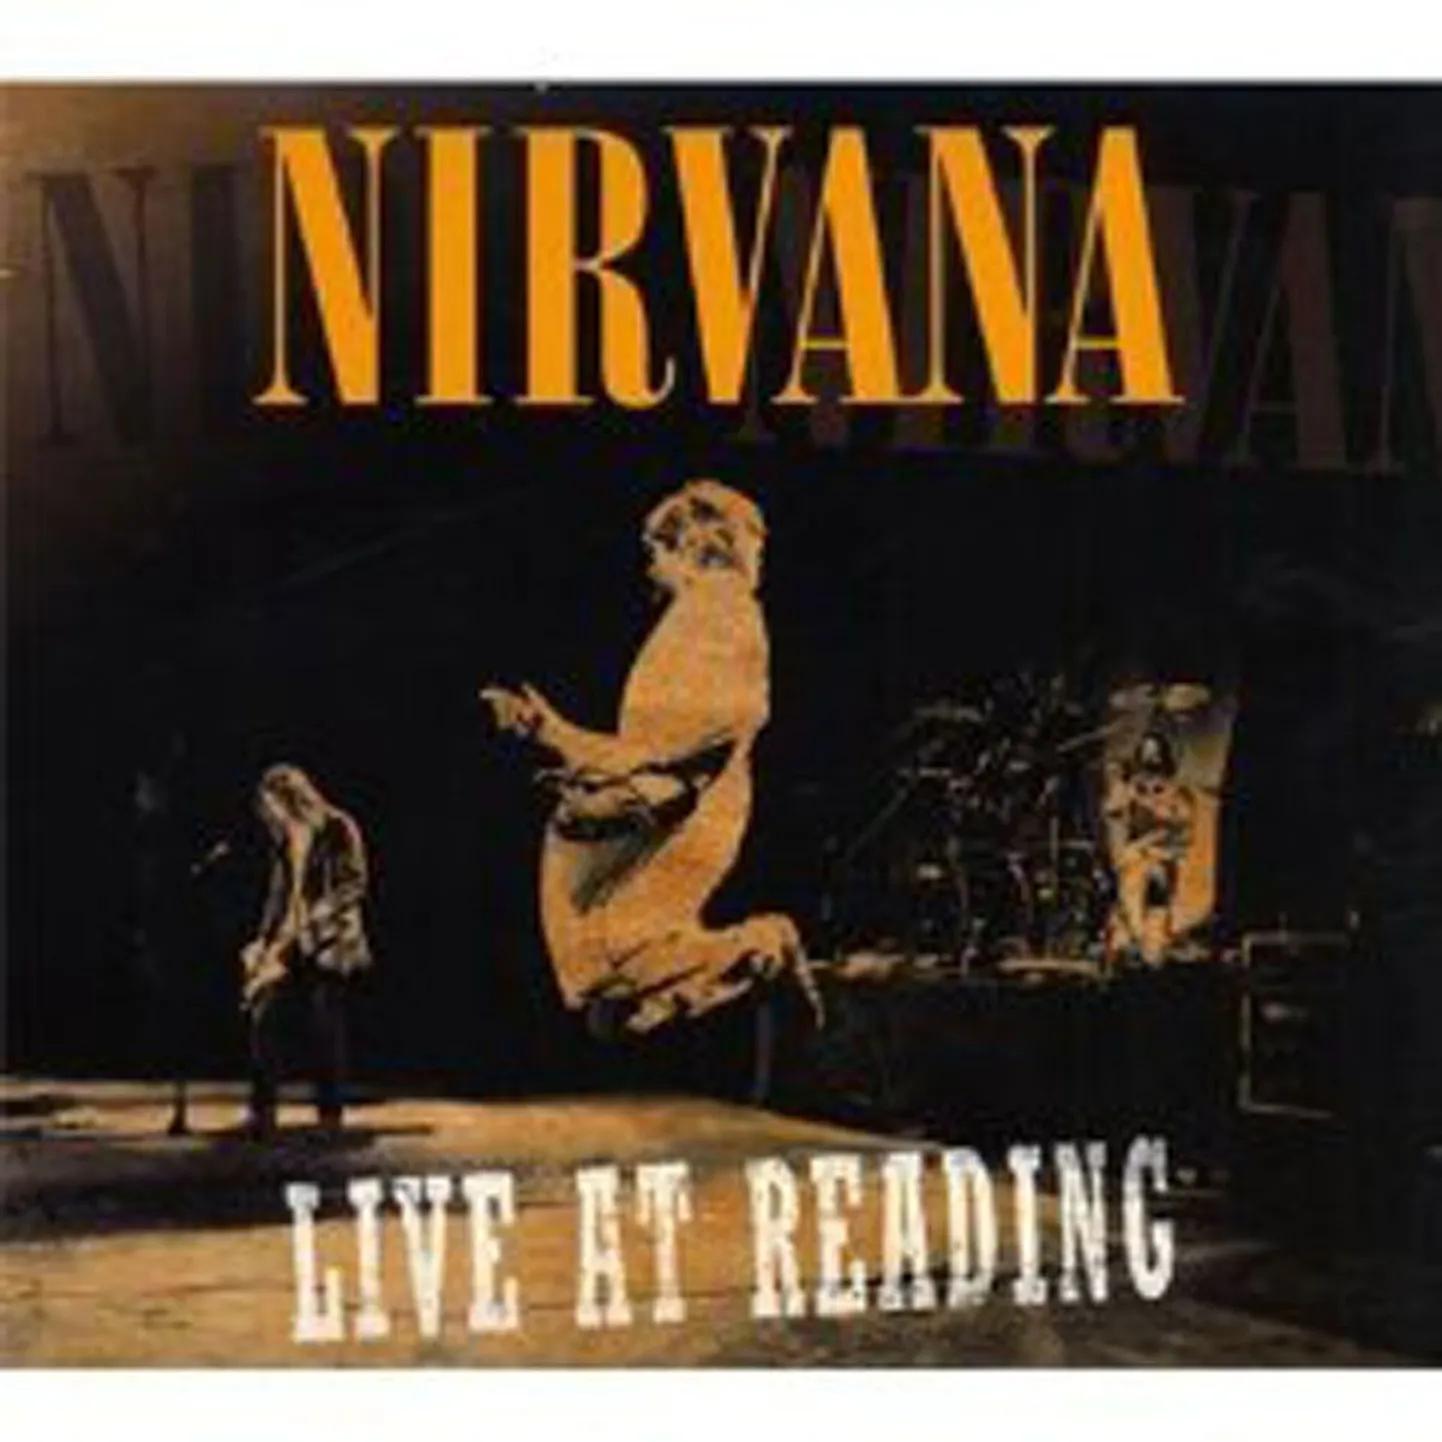 Nirvana
Live In Reading (Geffen)